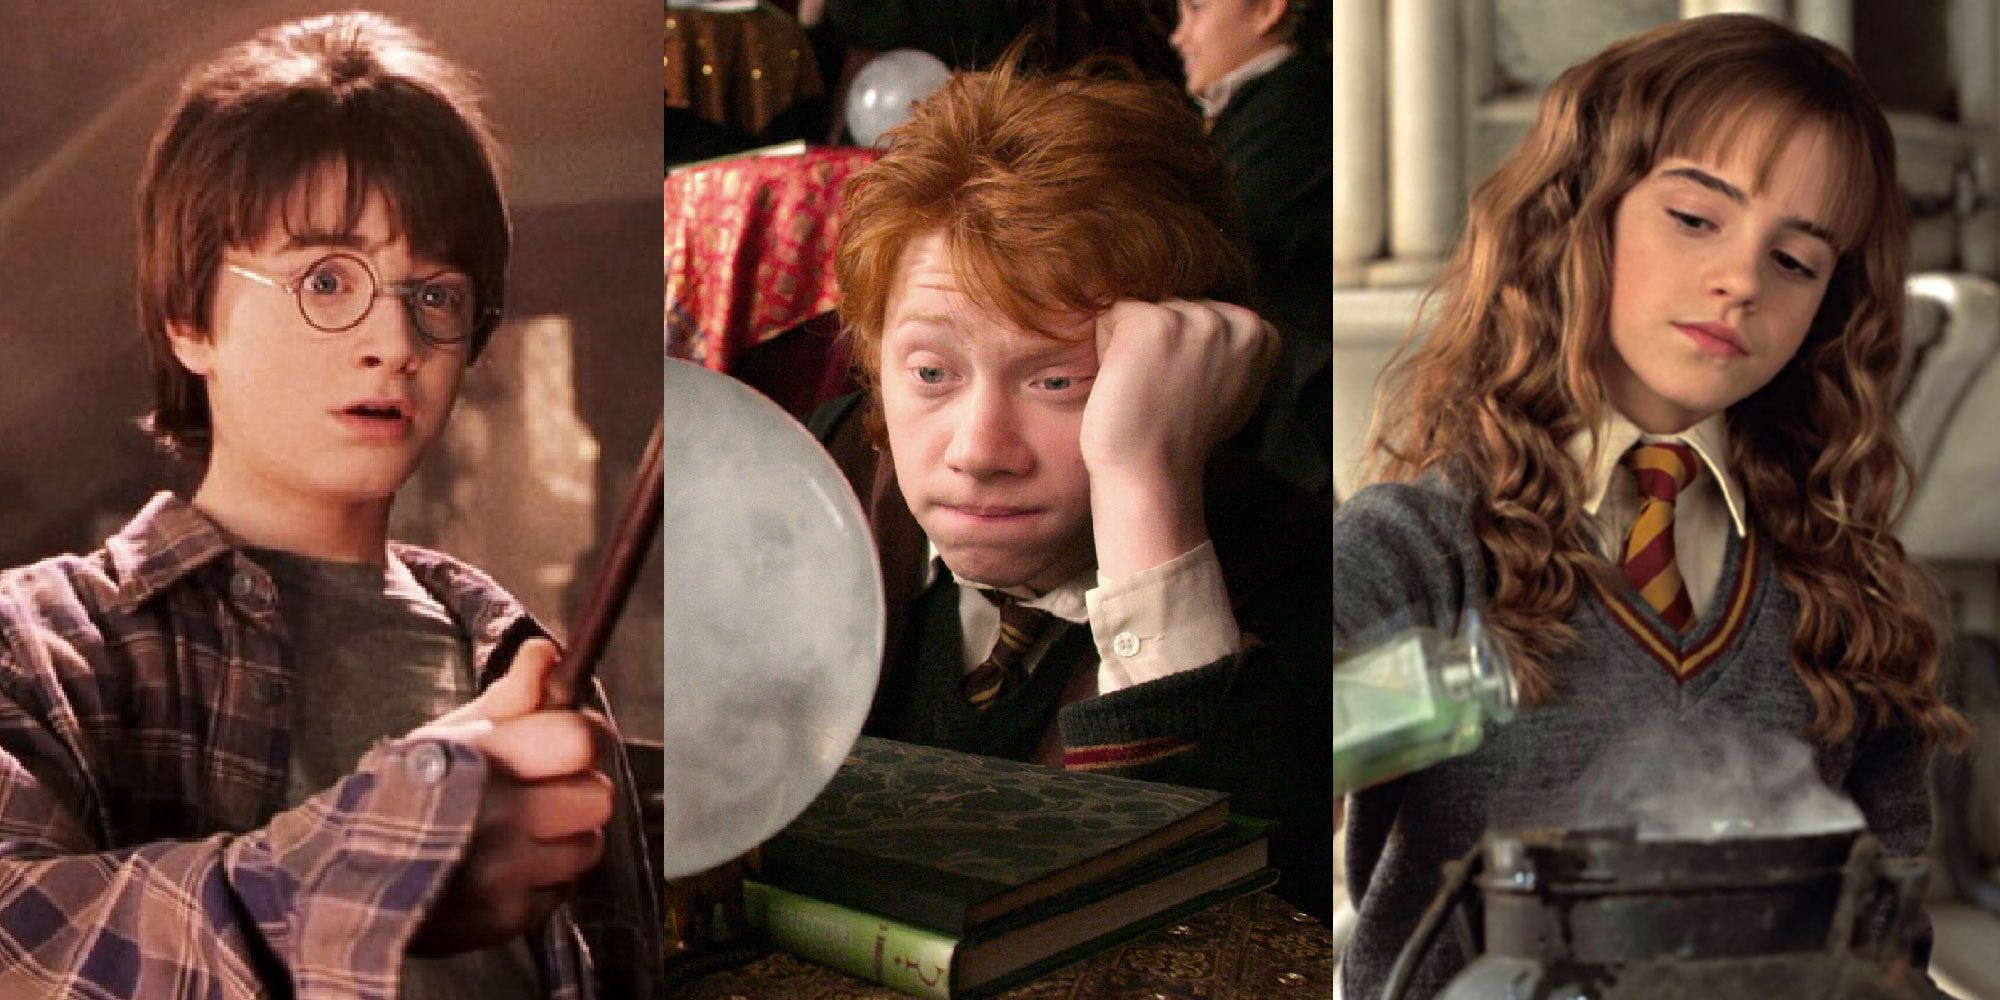 30 Harry Potter Logic Memes That Show The Series Doesn't Make Sense